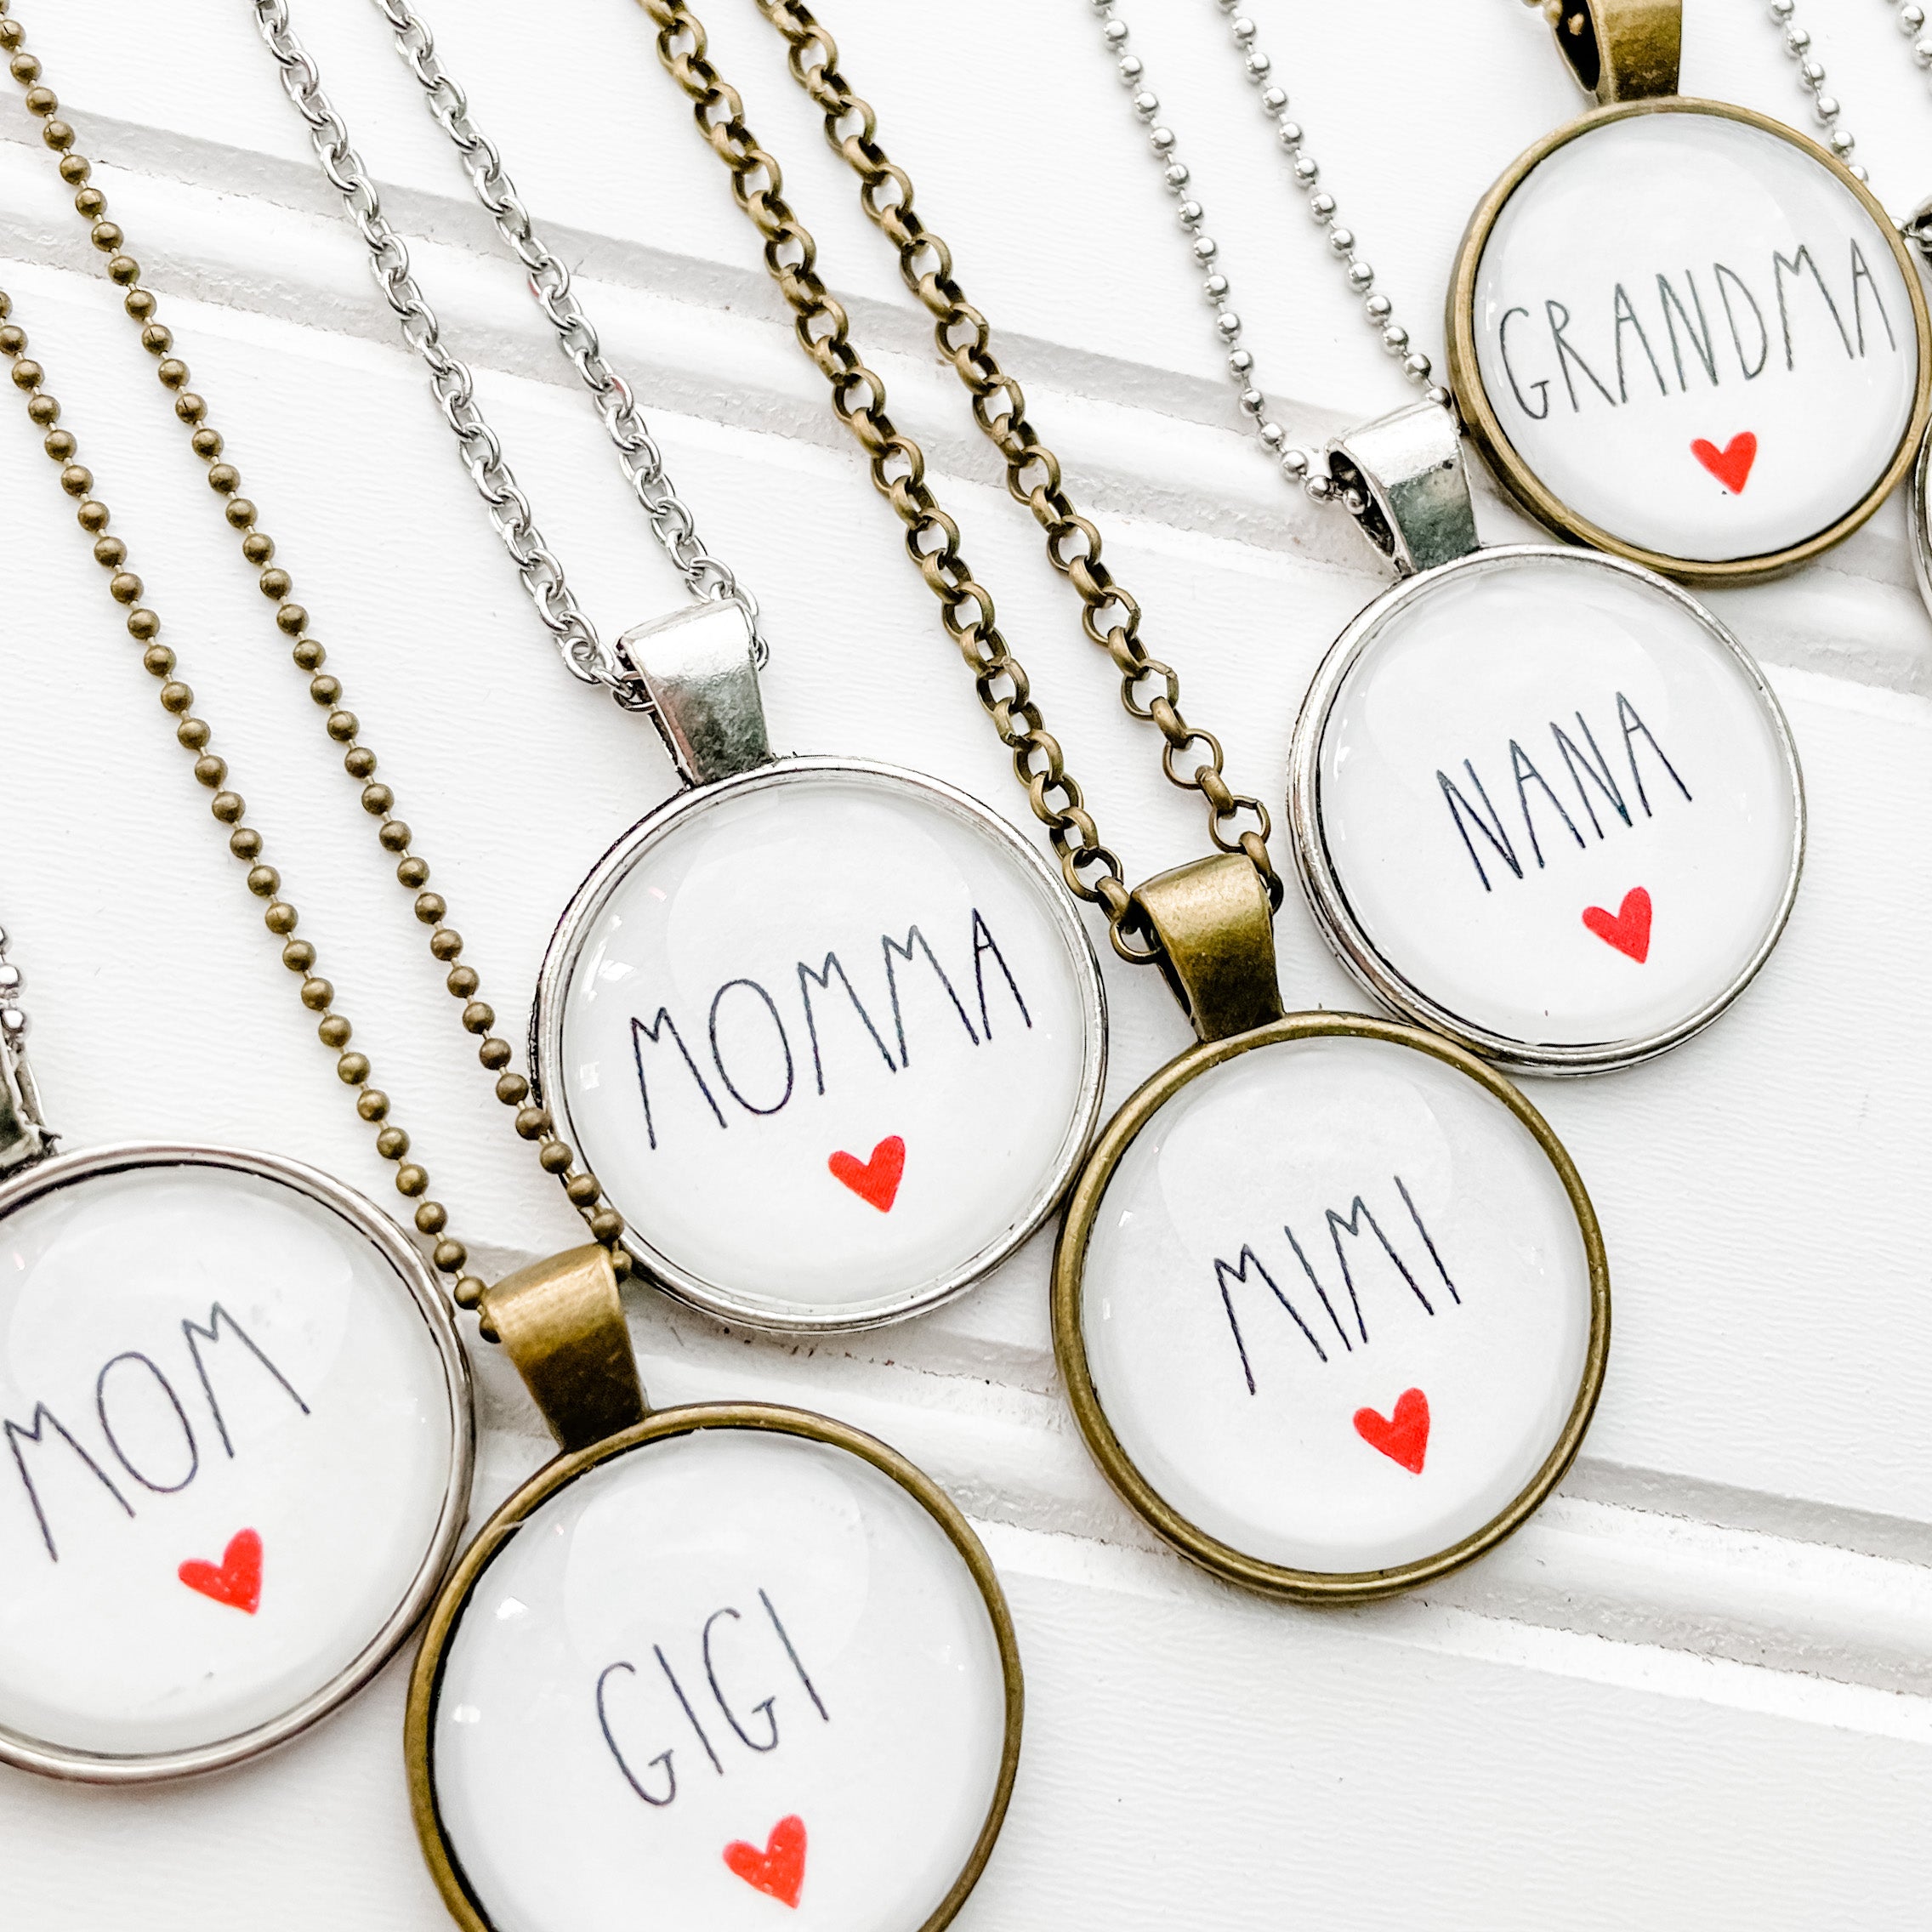 5 Things to Consider When Buying Custom Jewelry - Mimi's Jewelry